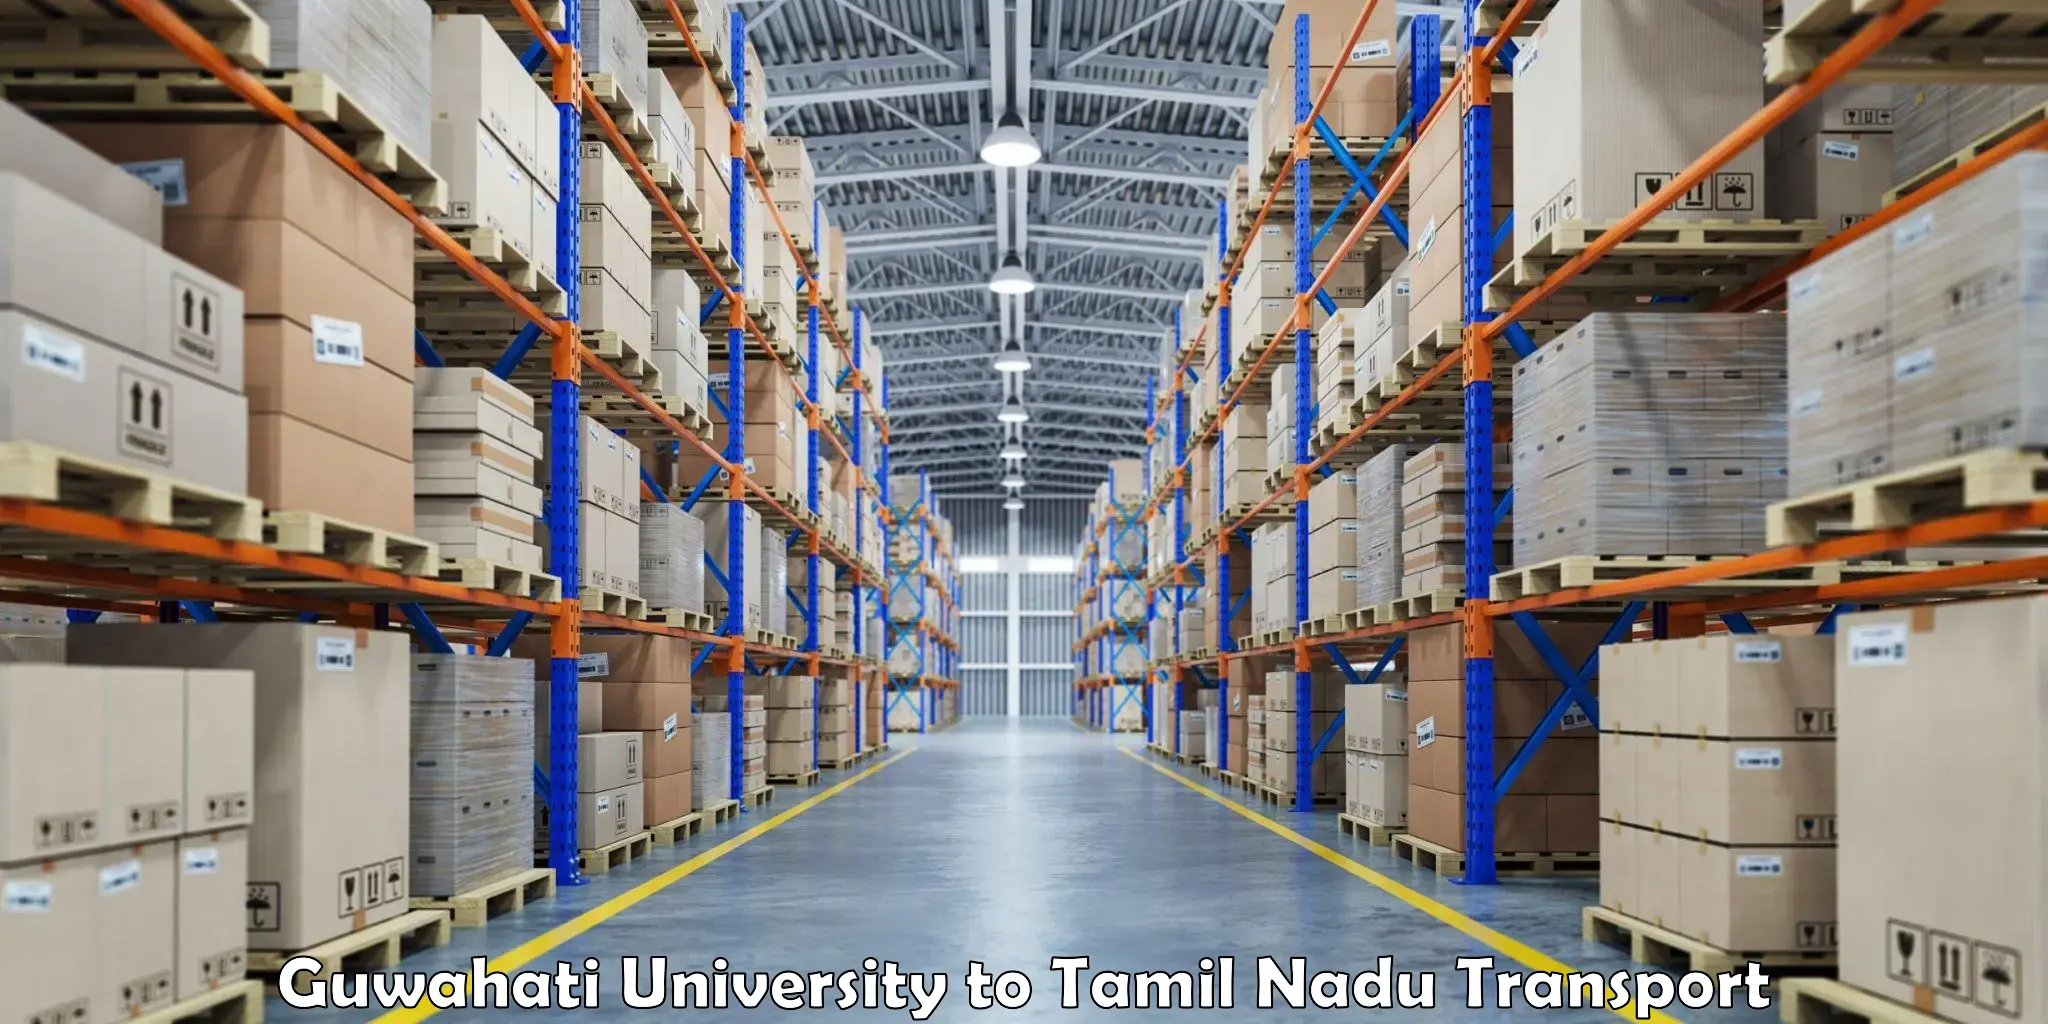 Commercial transport service Guwahati University to Tamil Nadu